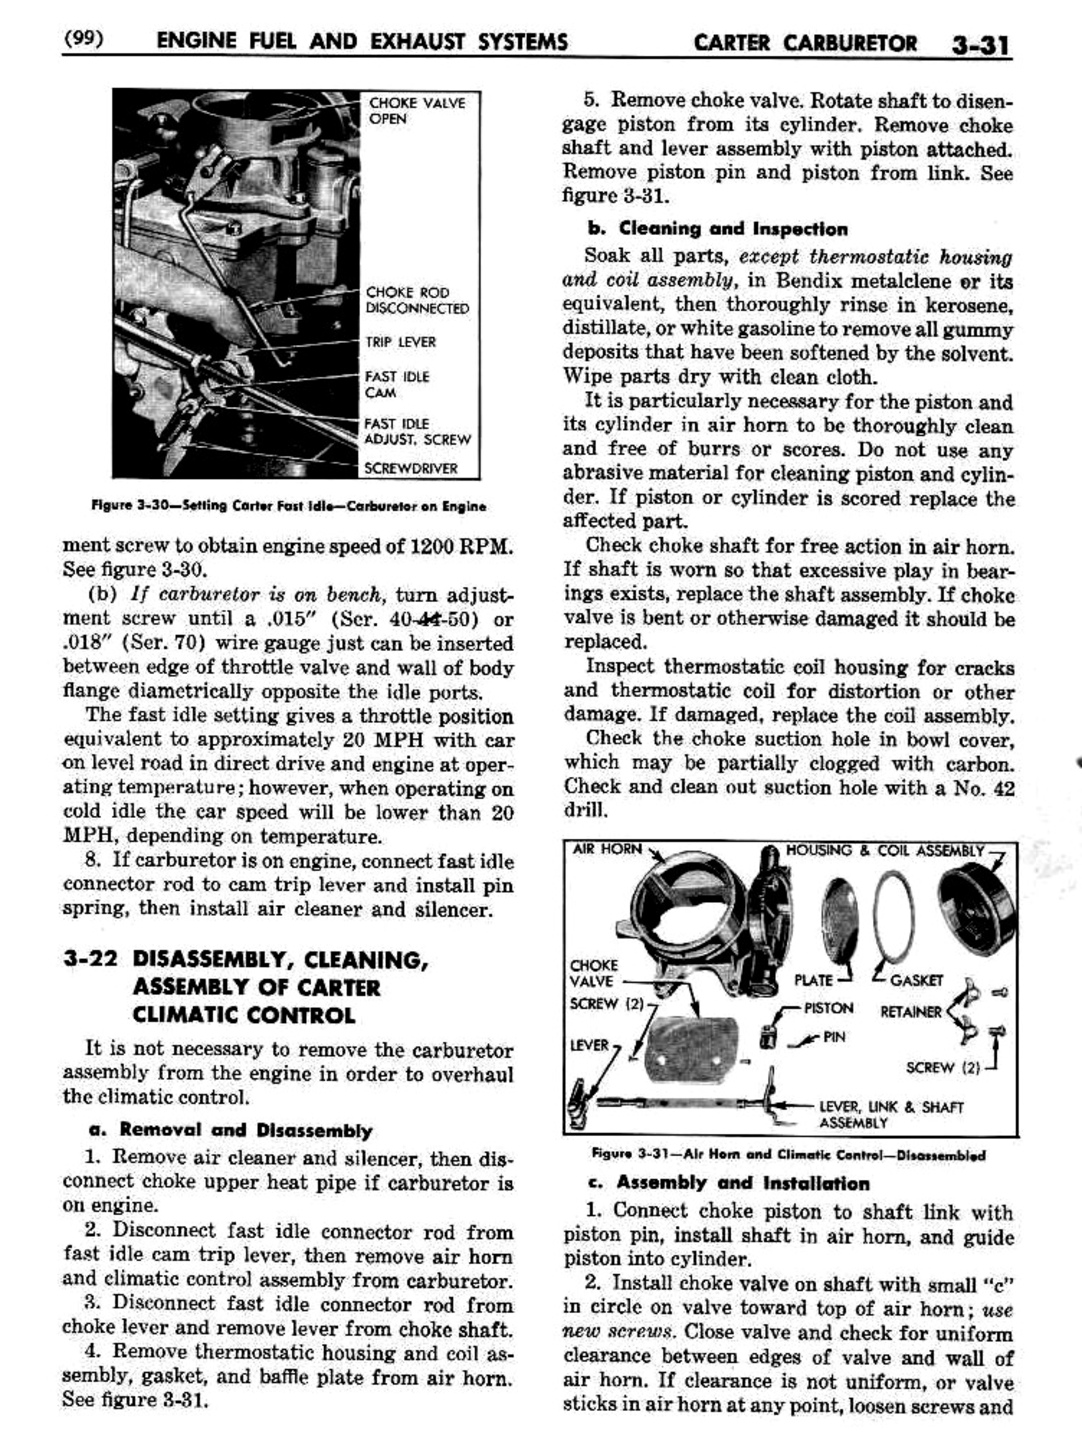 n_04 1951 Buick Shop Manual - Engine Fuel & Exhaust-031-031.jpg